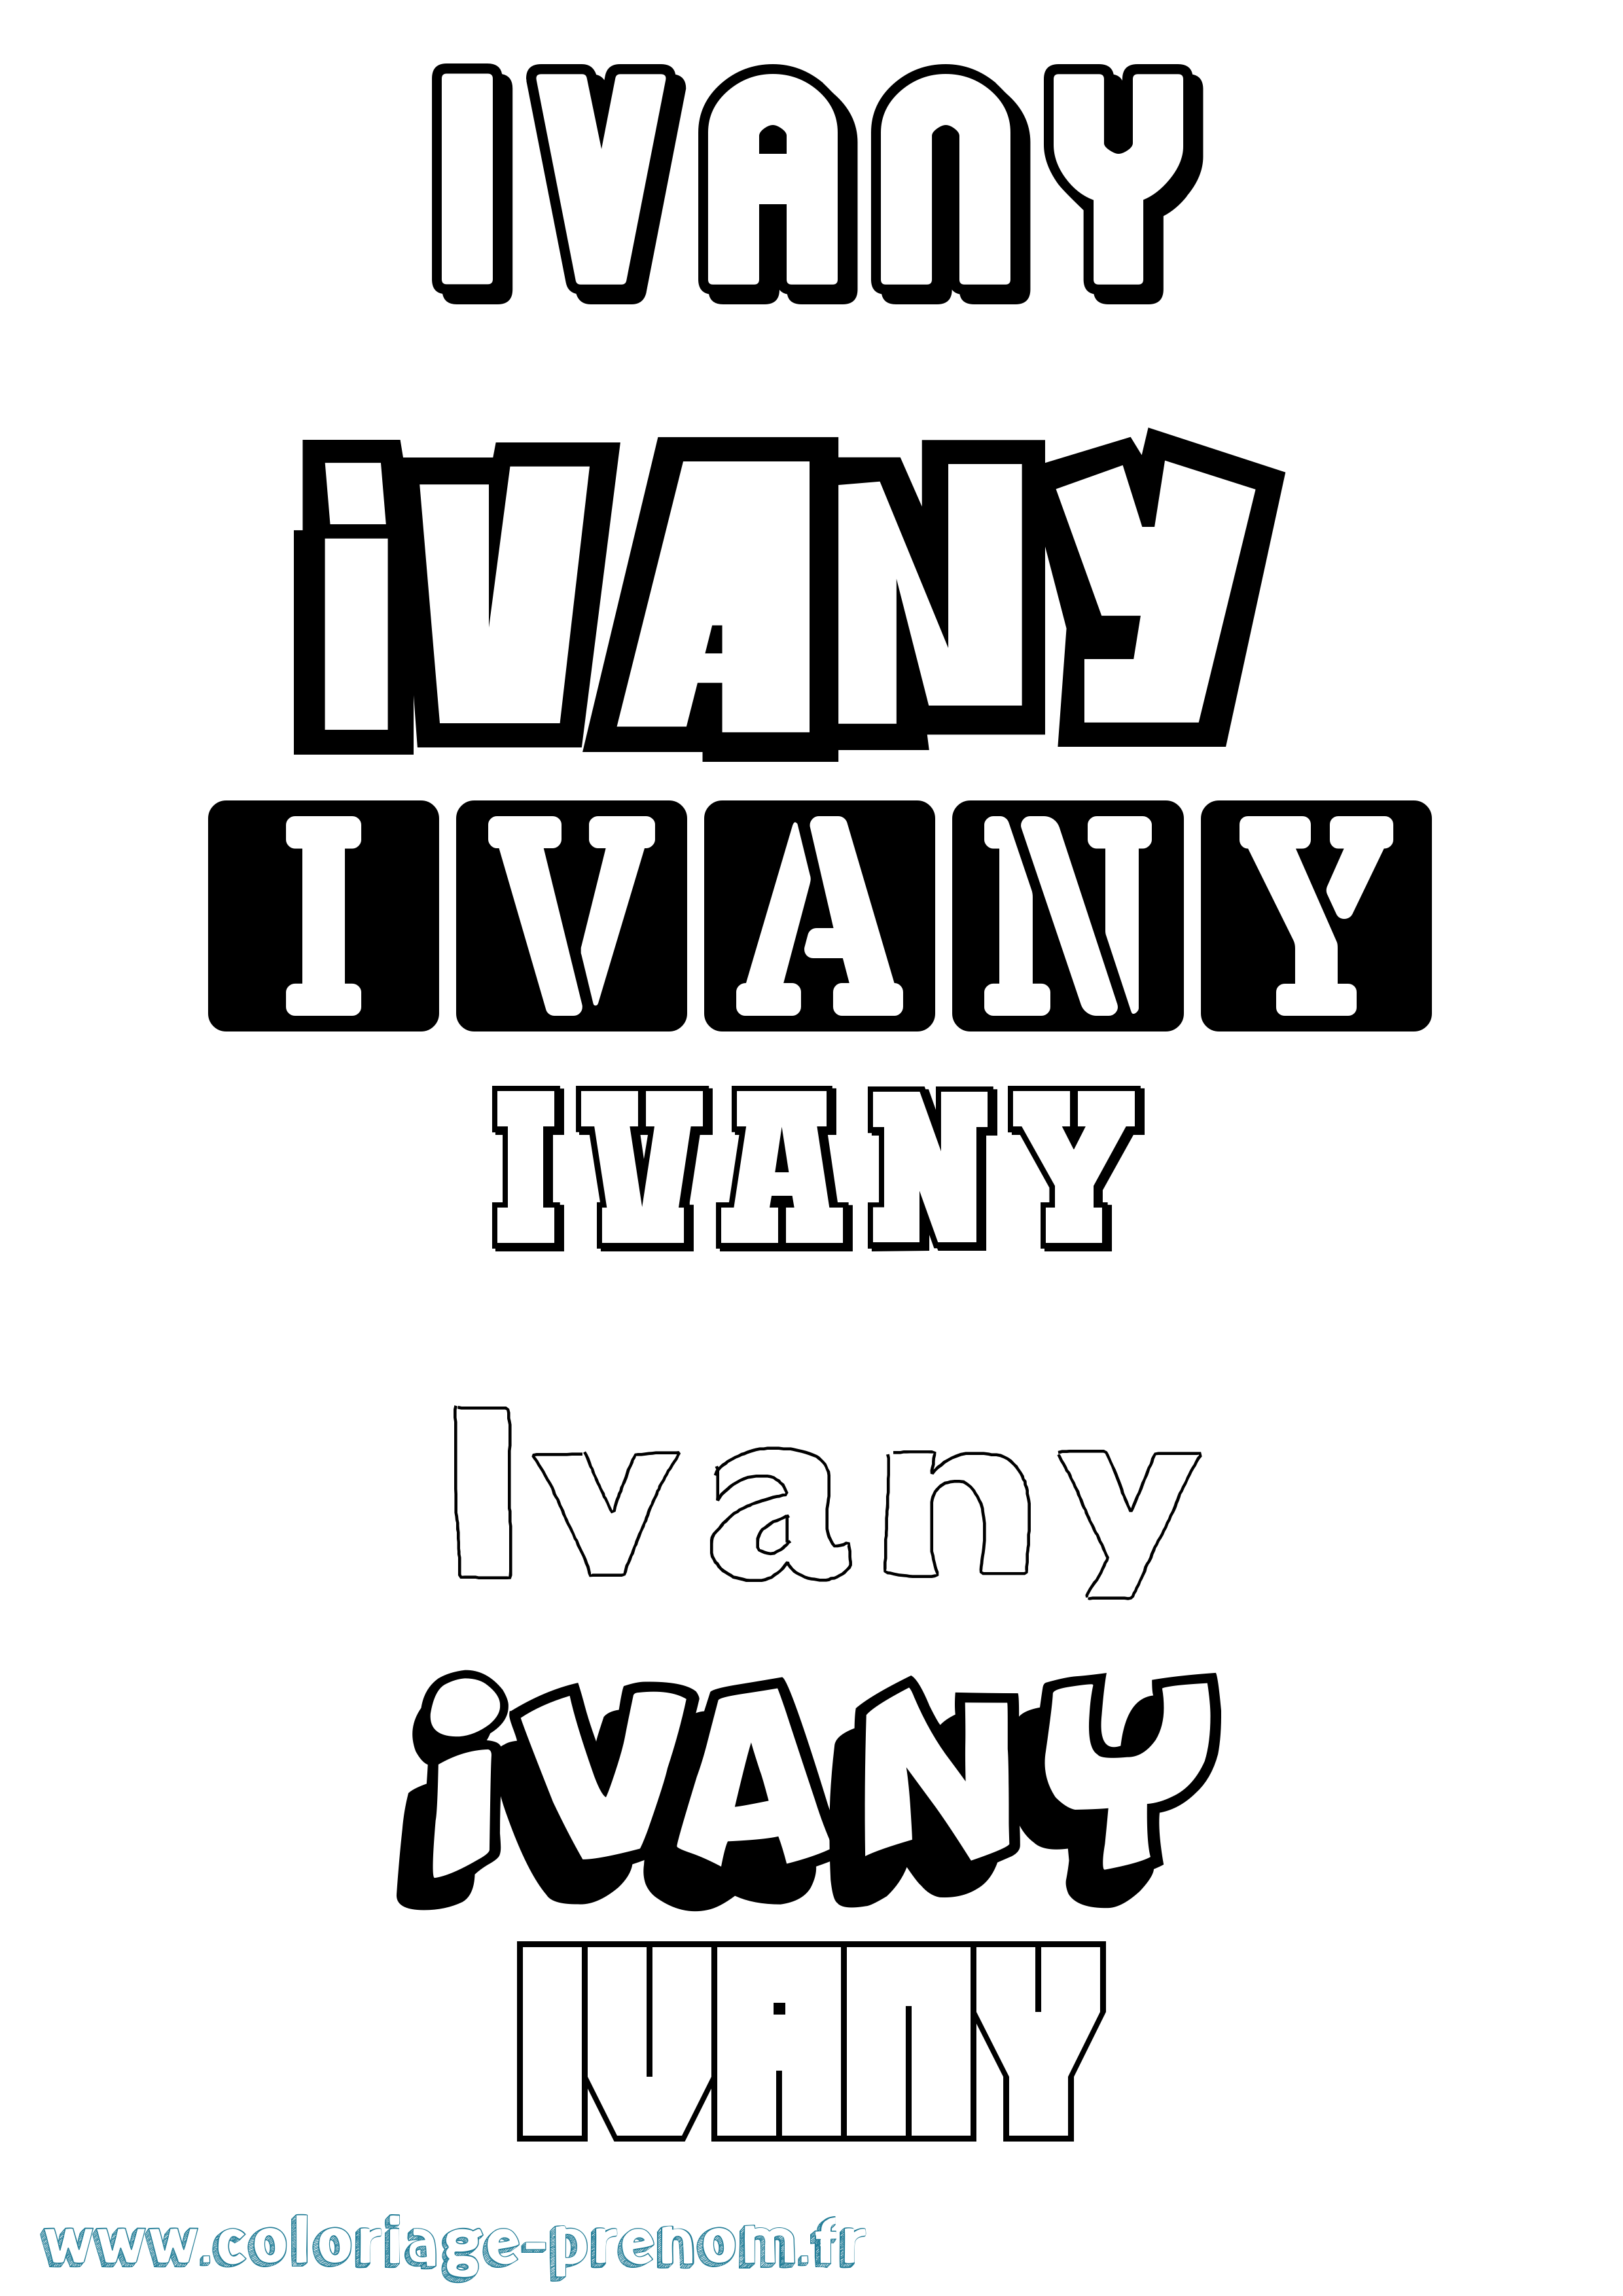 Coloriage prénom Ivany Simple